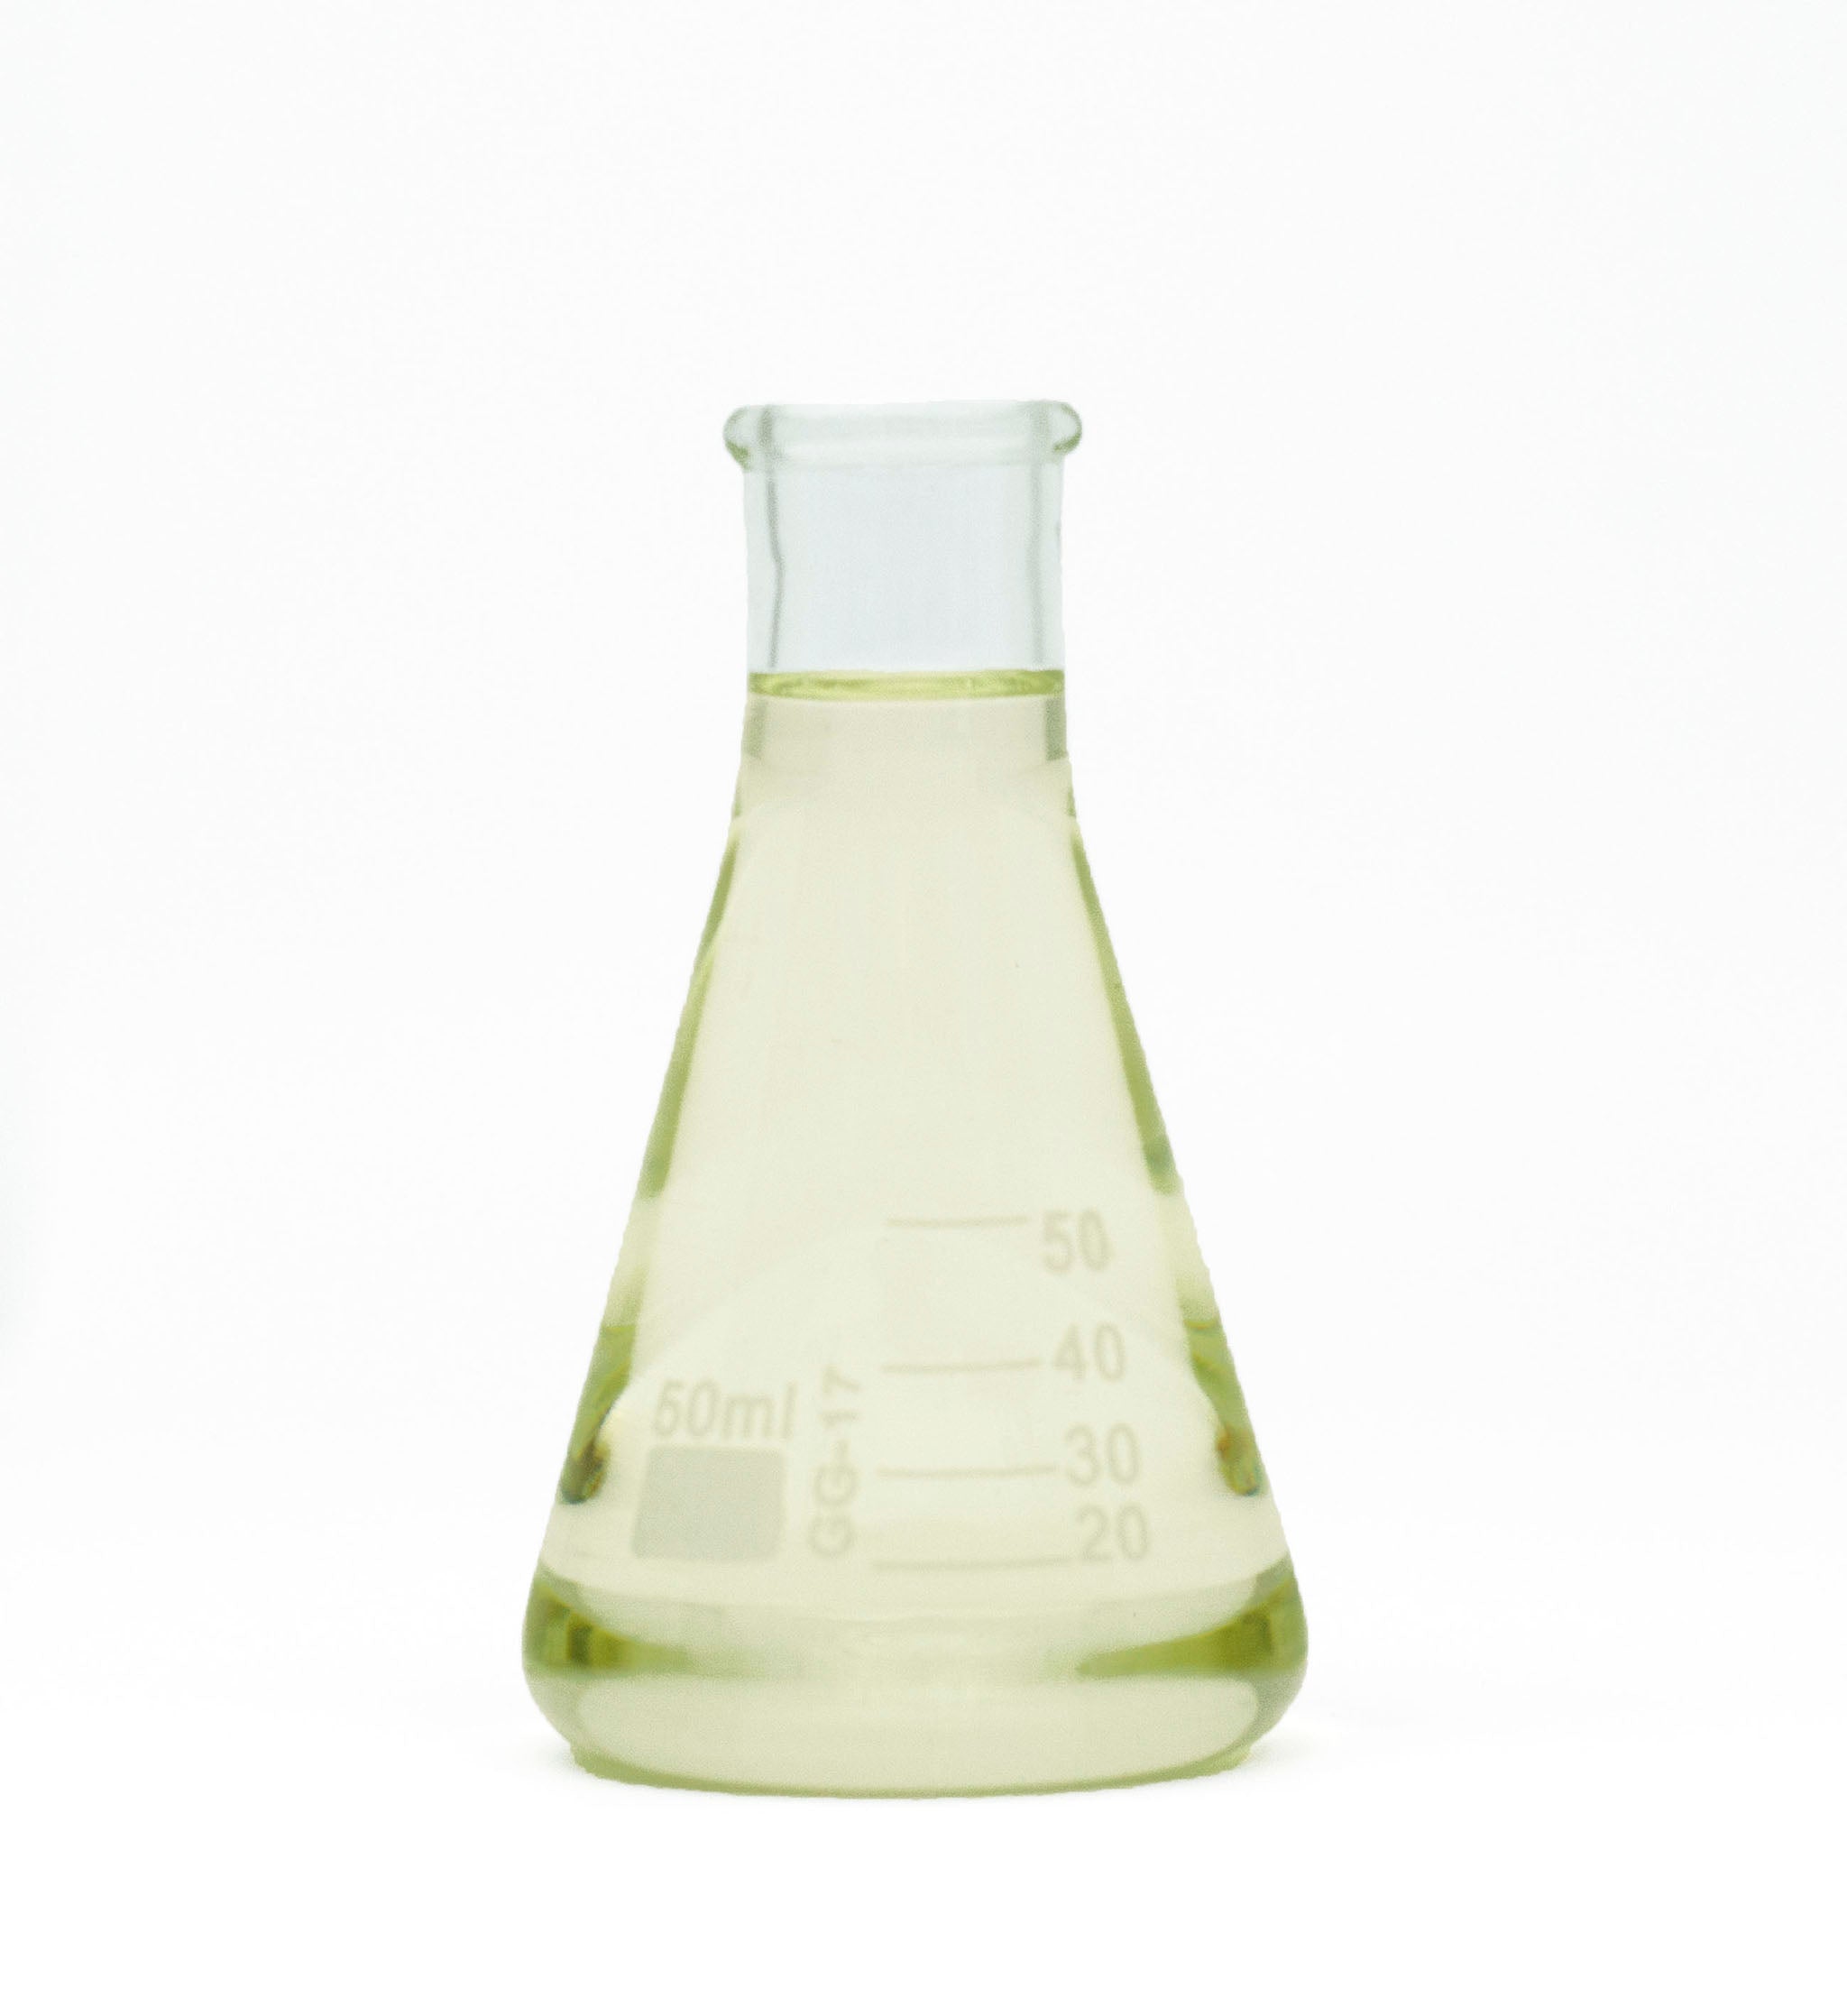 clary sage essential oil in beaker